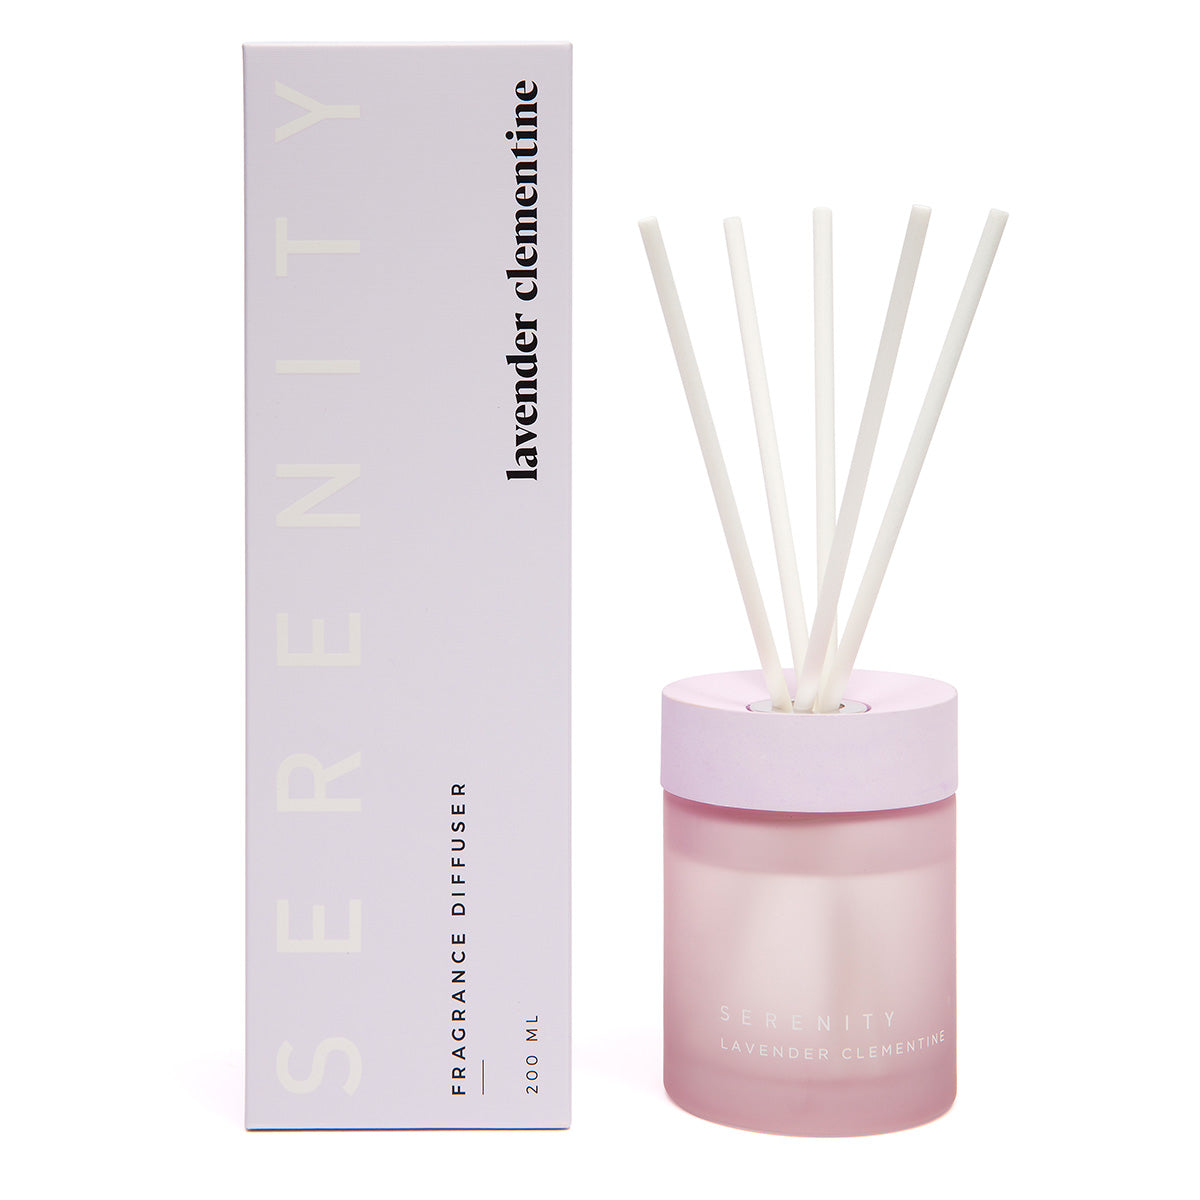 Serenity Coloured Core Diffuser Lavender Clementine – Home Fragrance from BJs Furniture Horsham